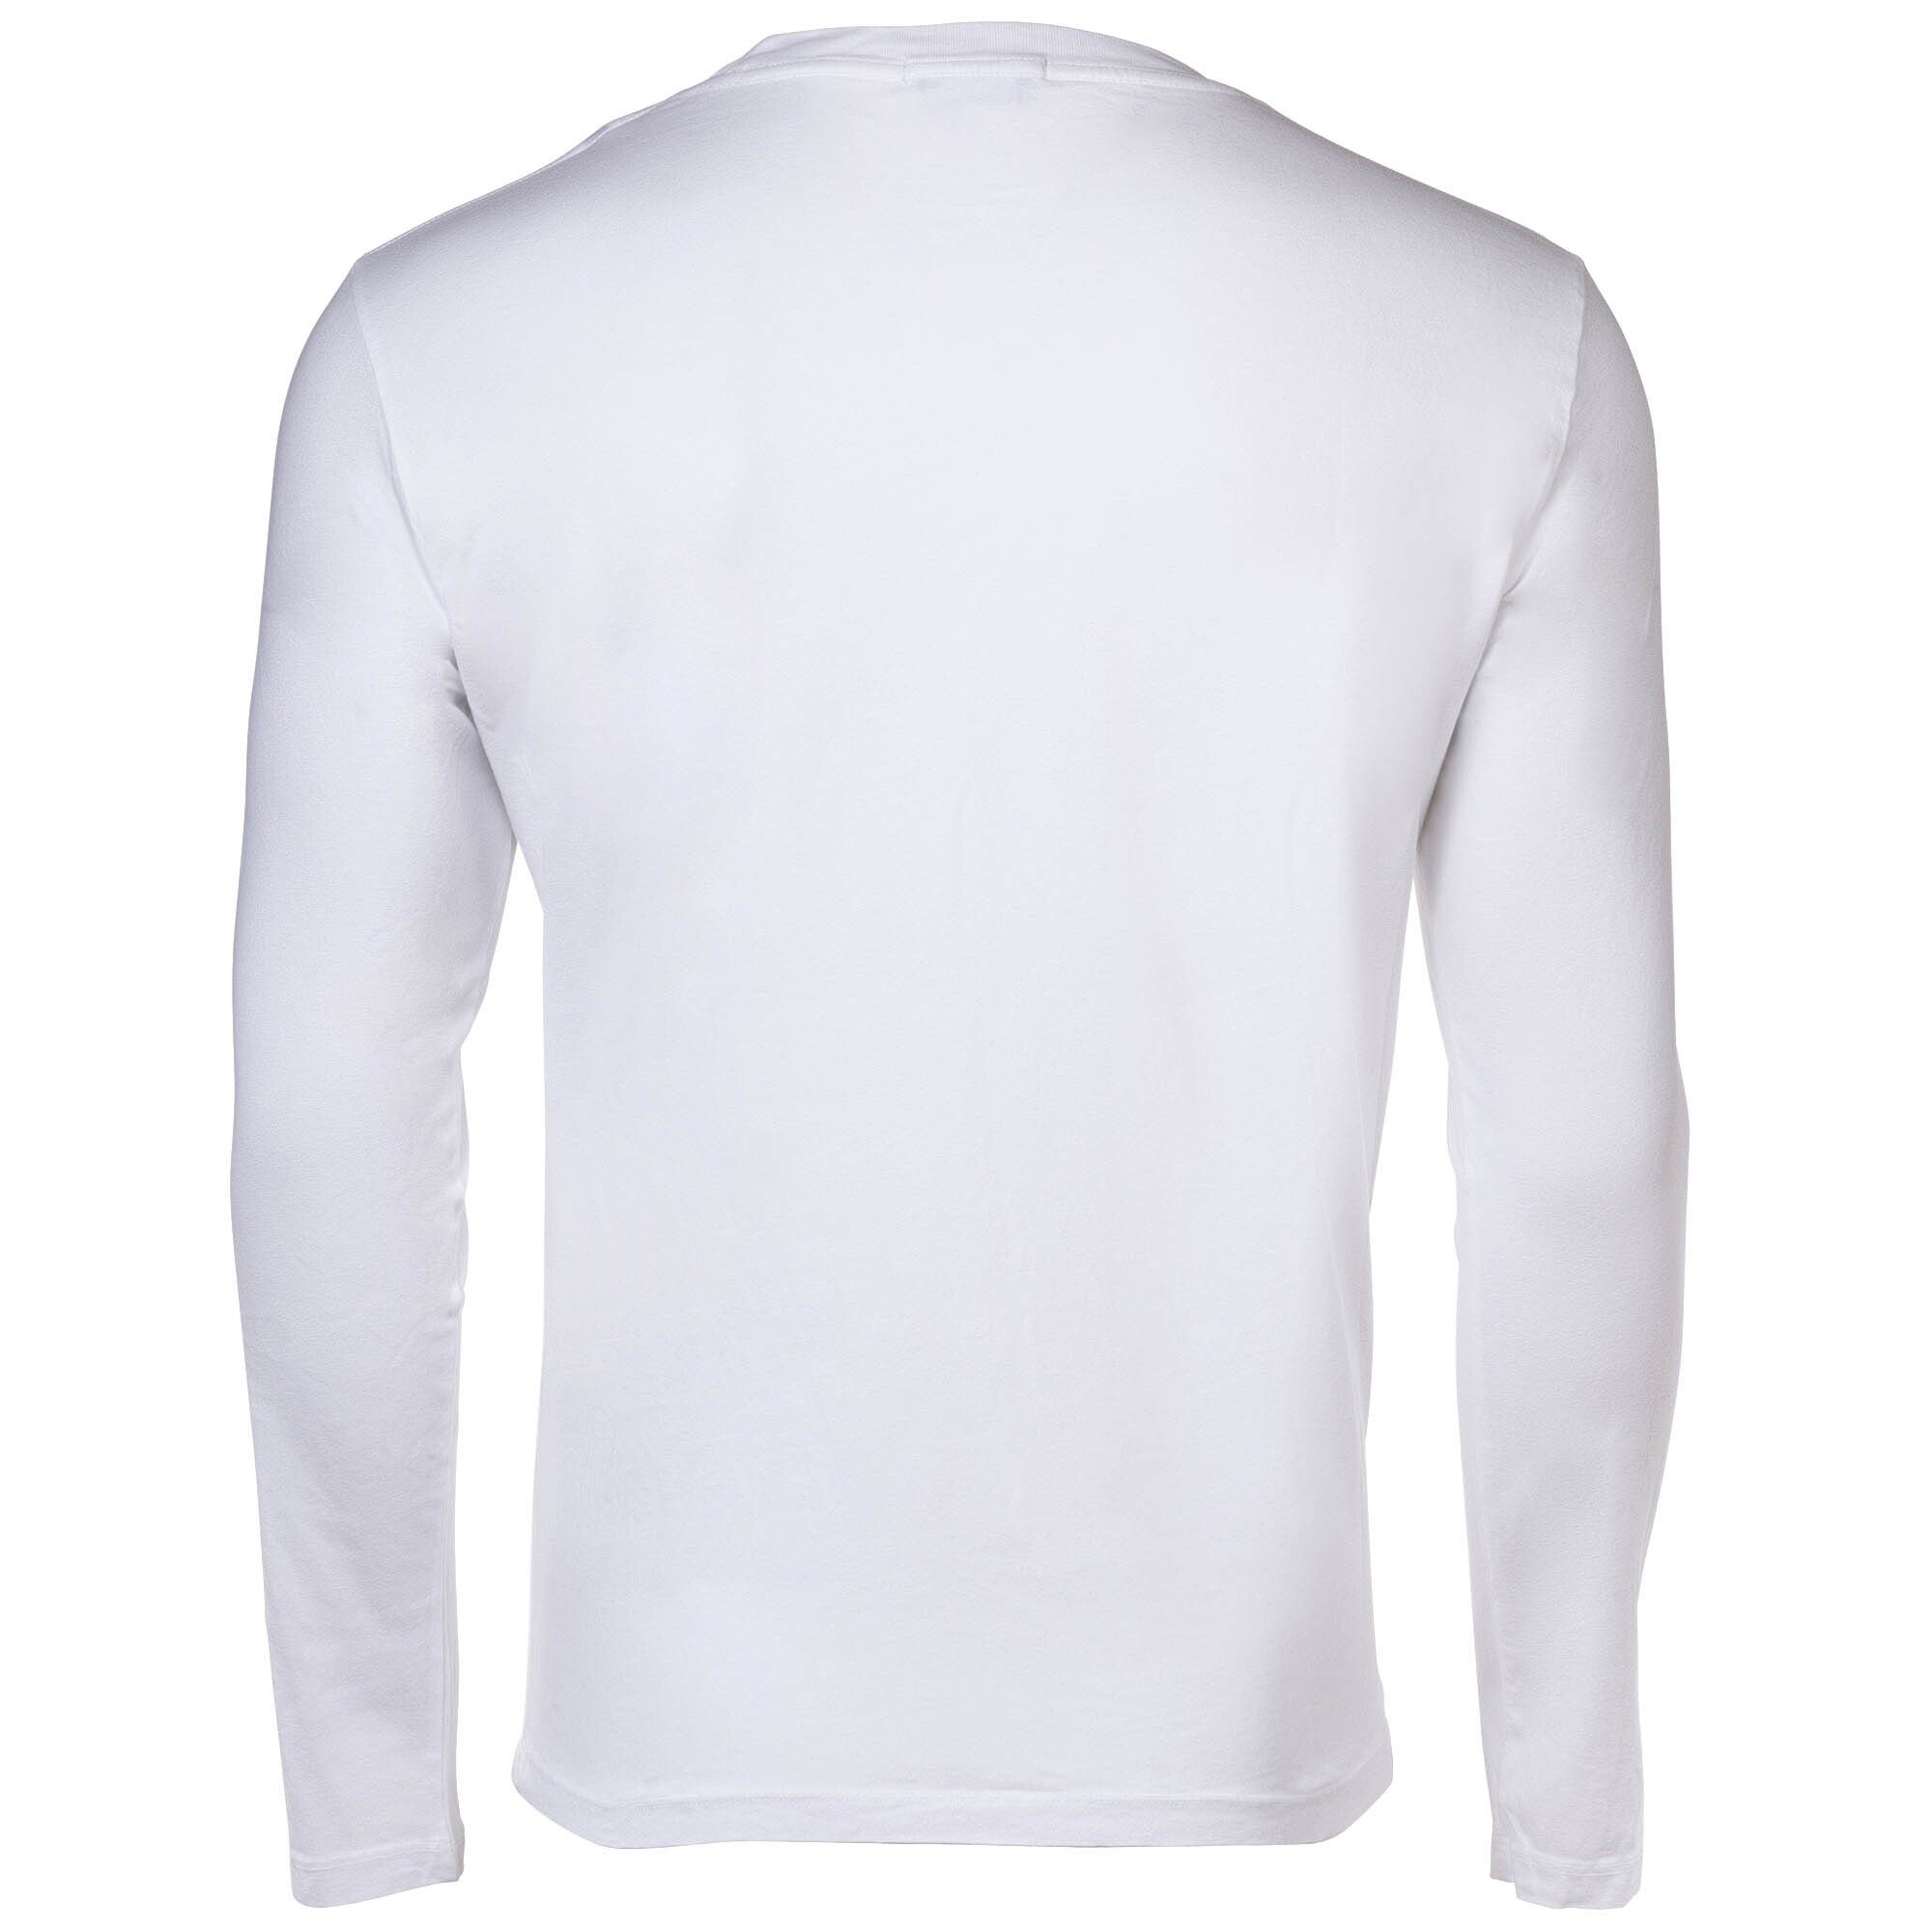 Replay Baumwolle, Herren Rundhals, Longsleeve, T-Shirt Weiß Jersey